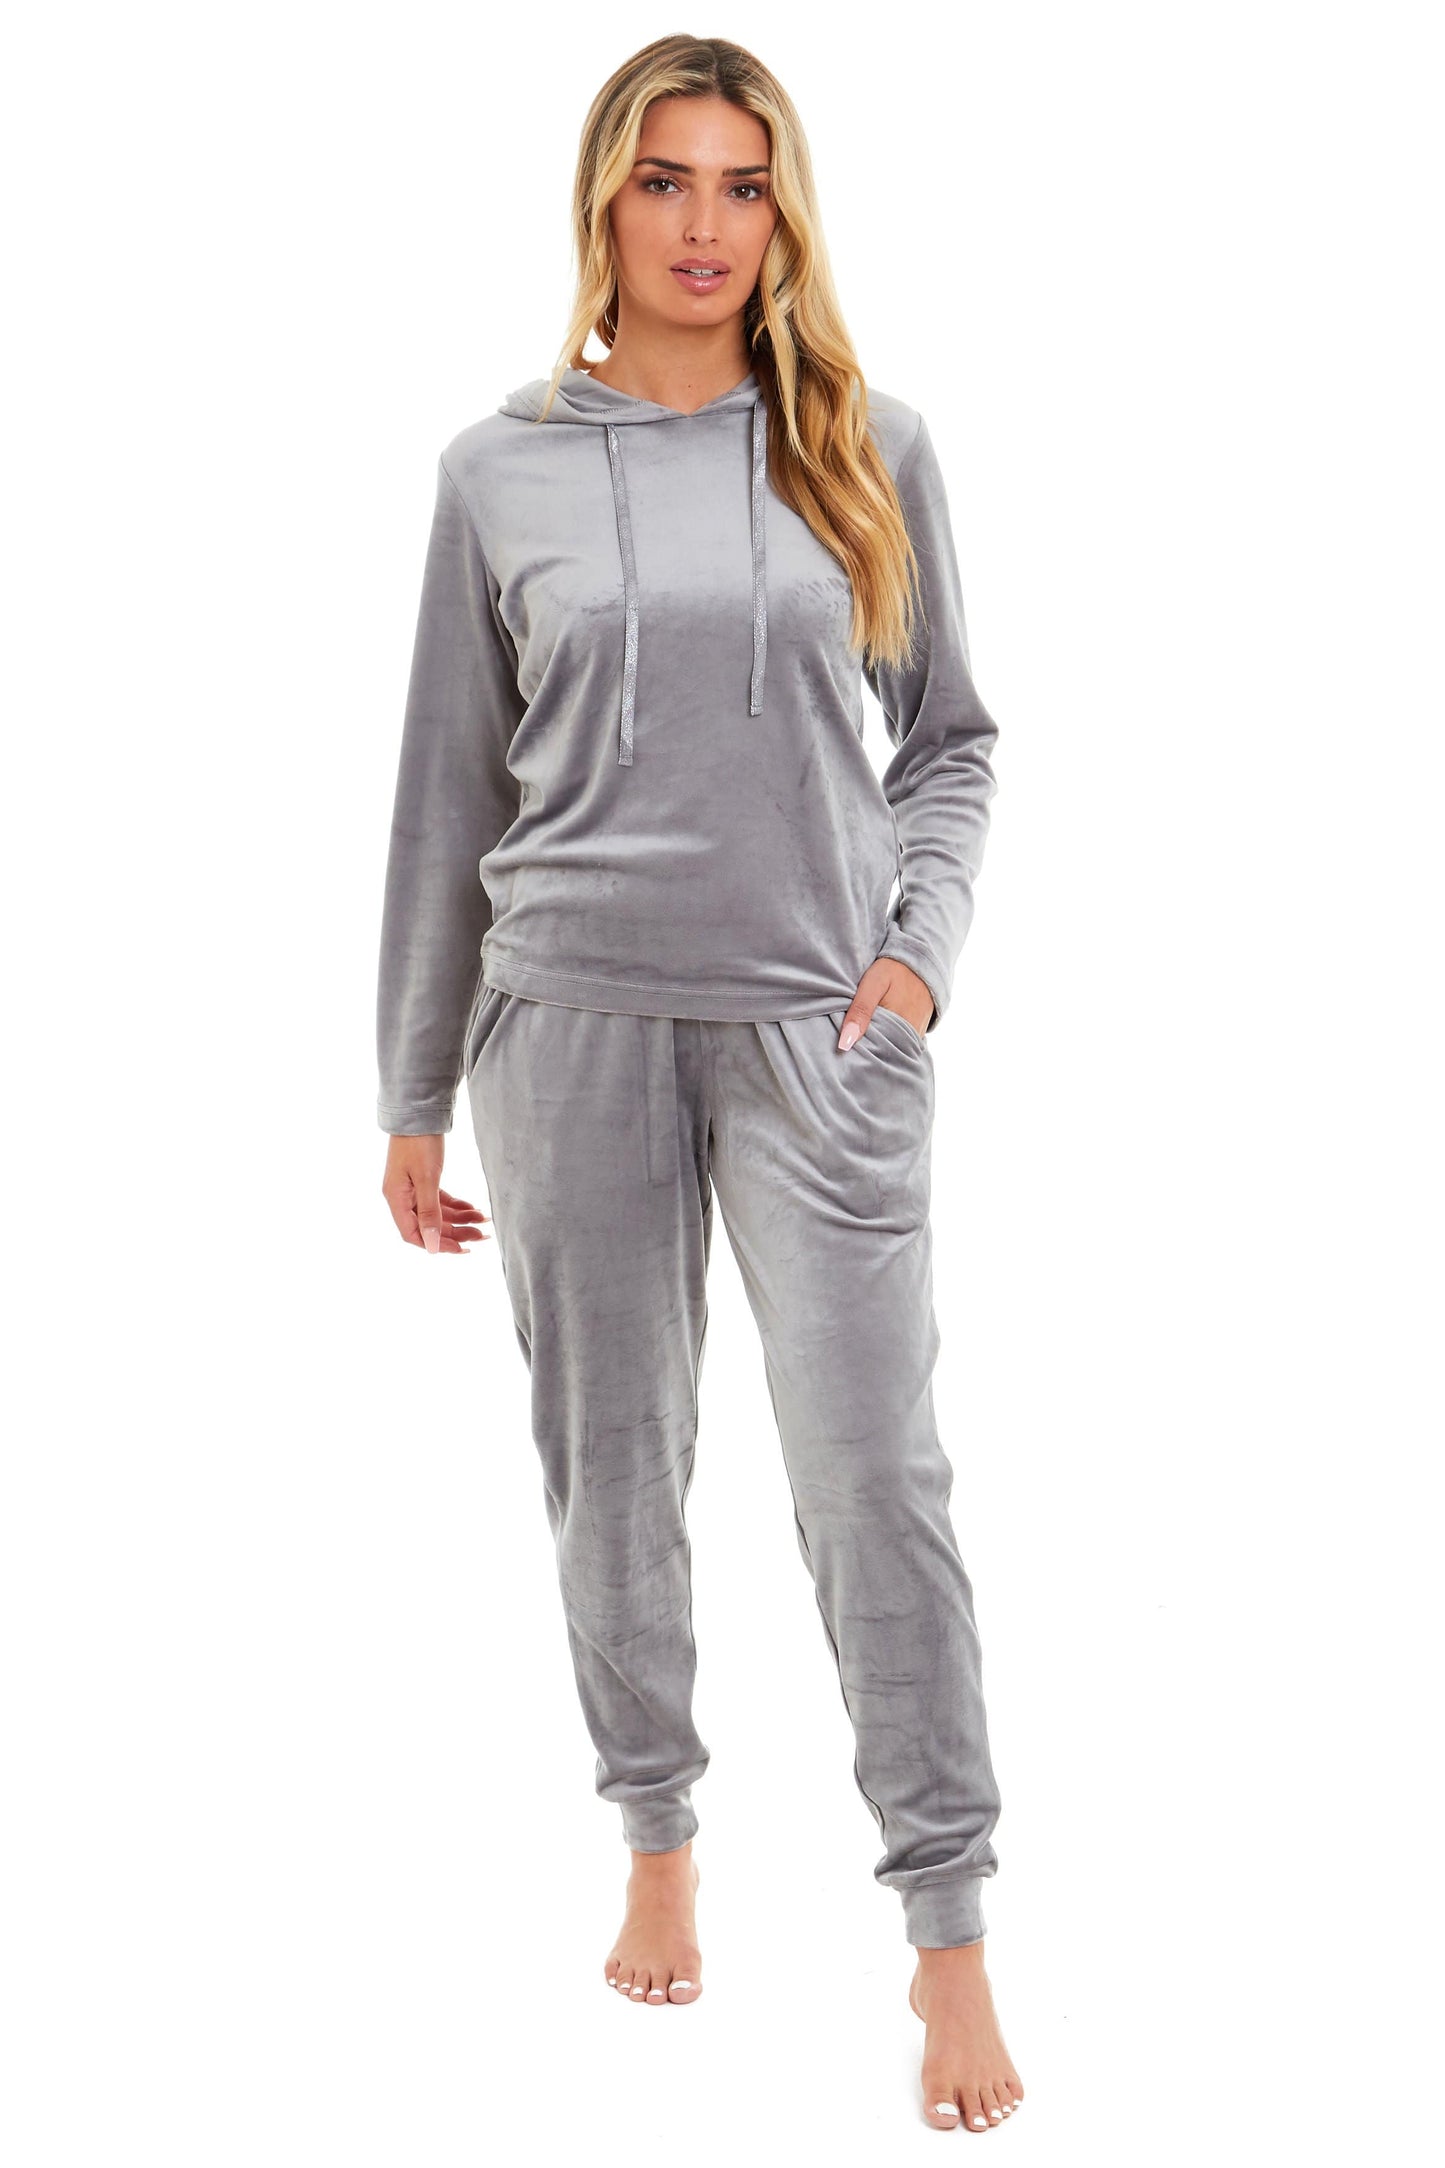 Ladies Super Soft Grey Loungewear, Pyjama Lounge Set or Hooded